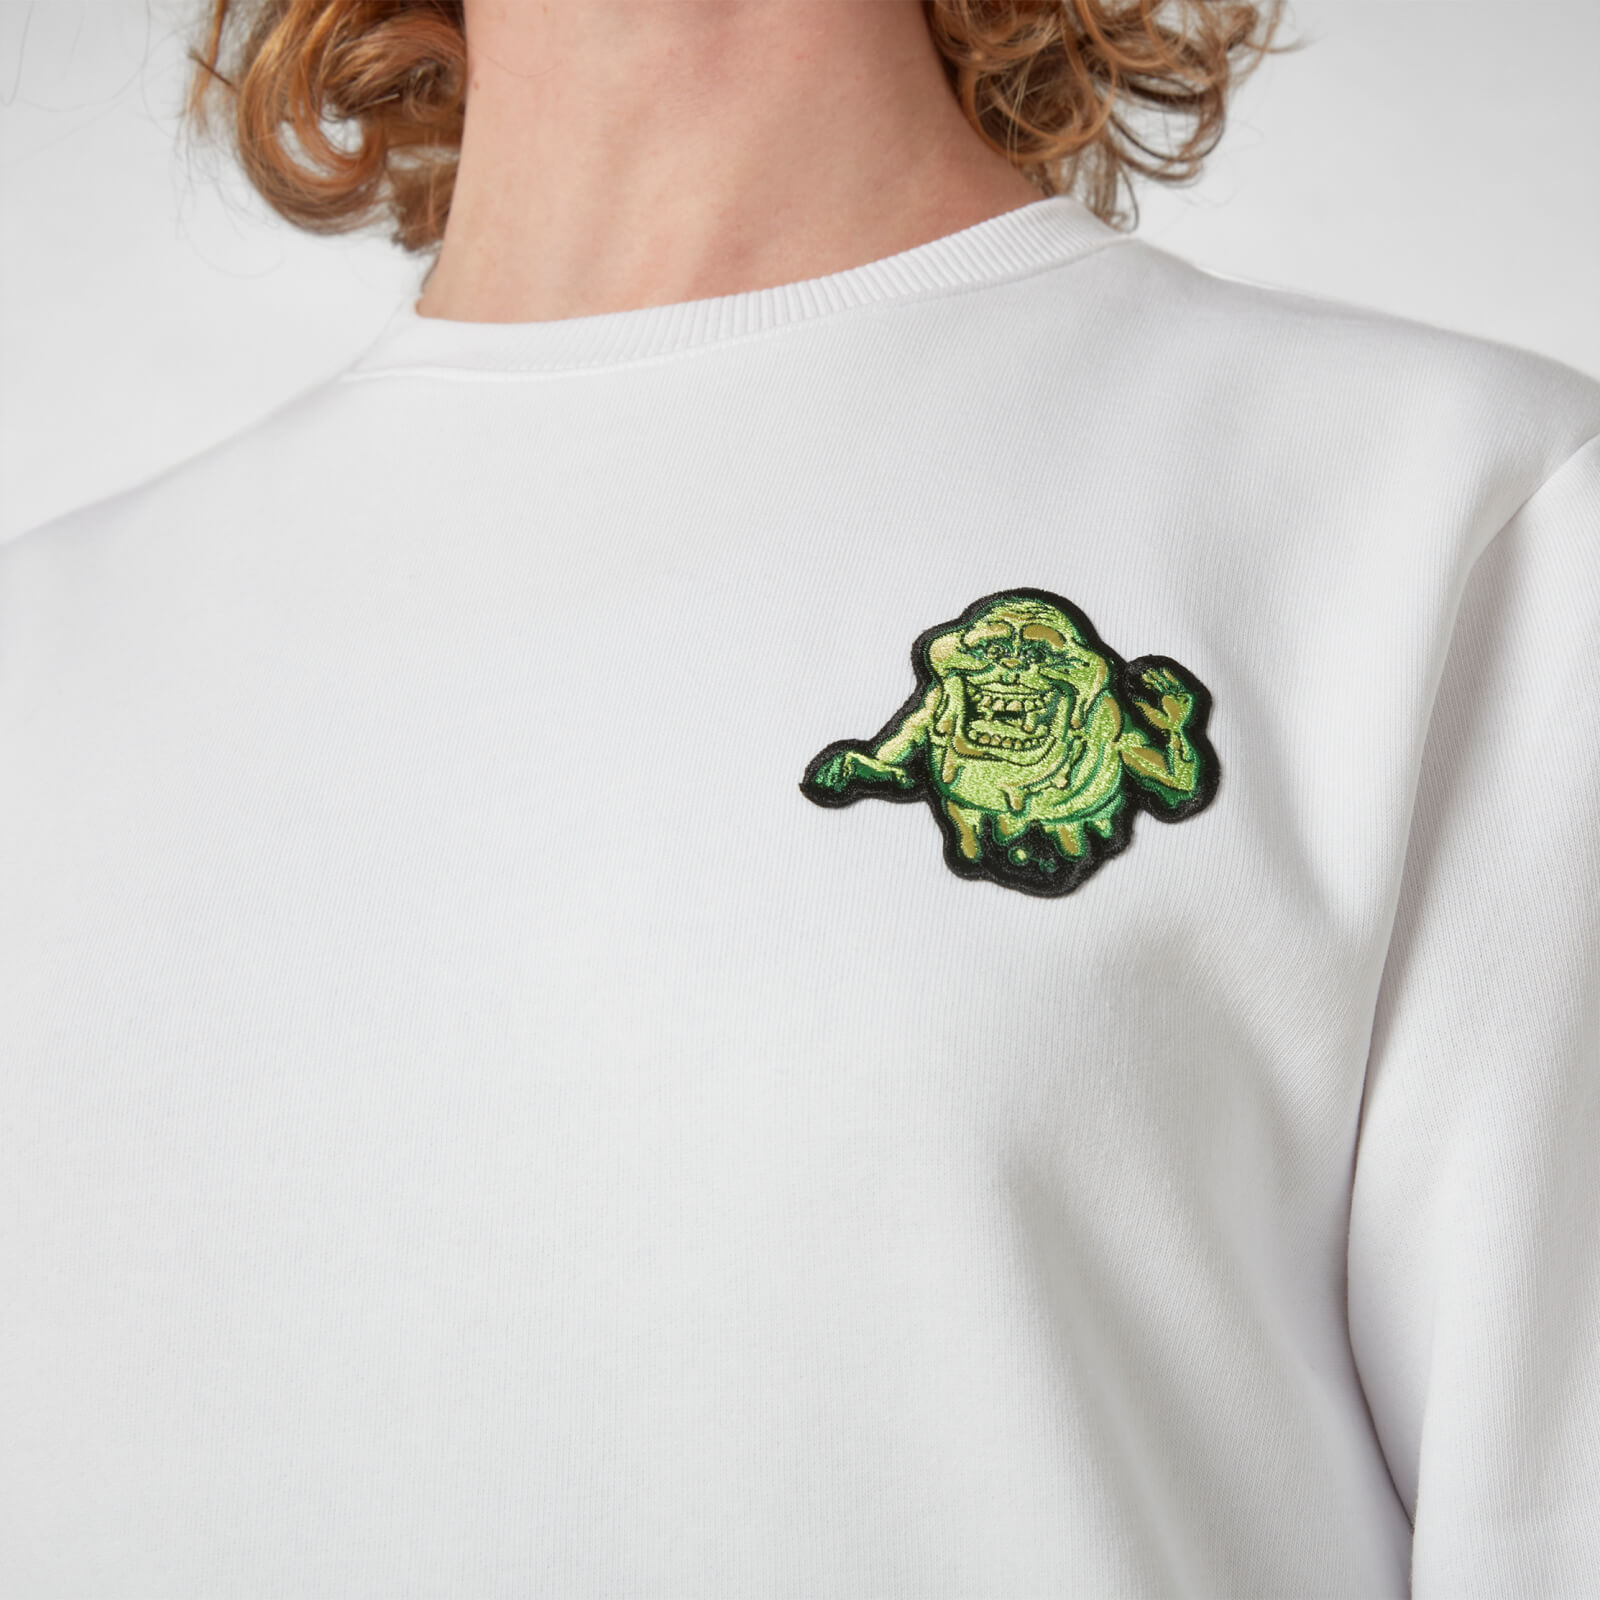 Ghostbusters Slimer Pocket Square Sweatshirt - White - M